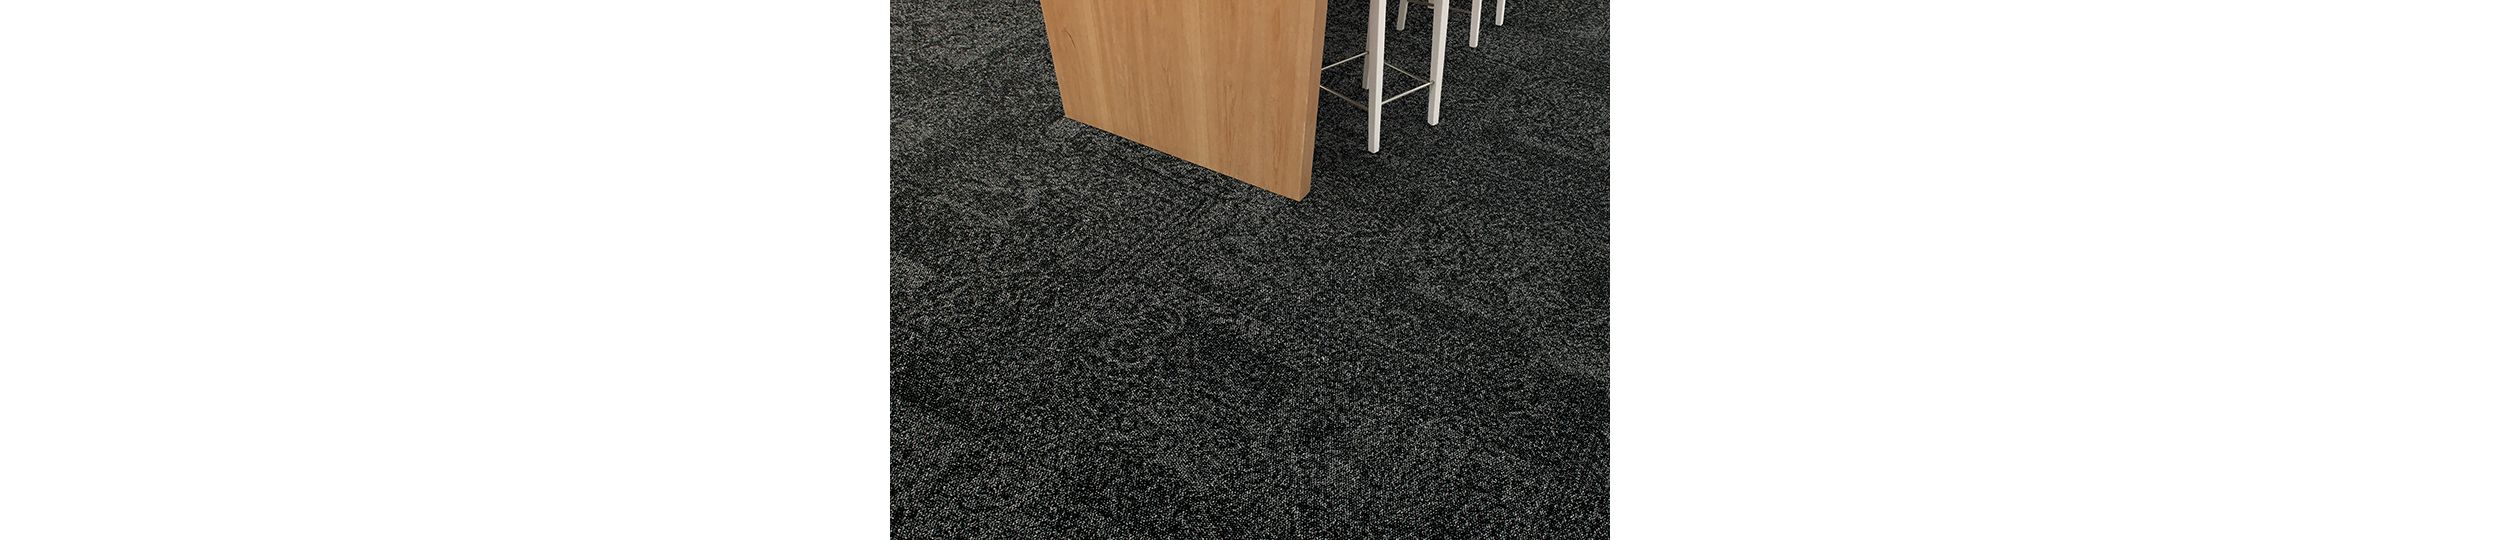 Interface Open Air 405 carpet tile in floor view with corner of wood table número de imagen 4